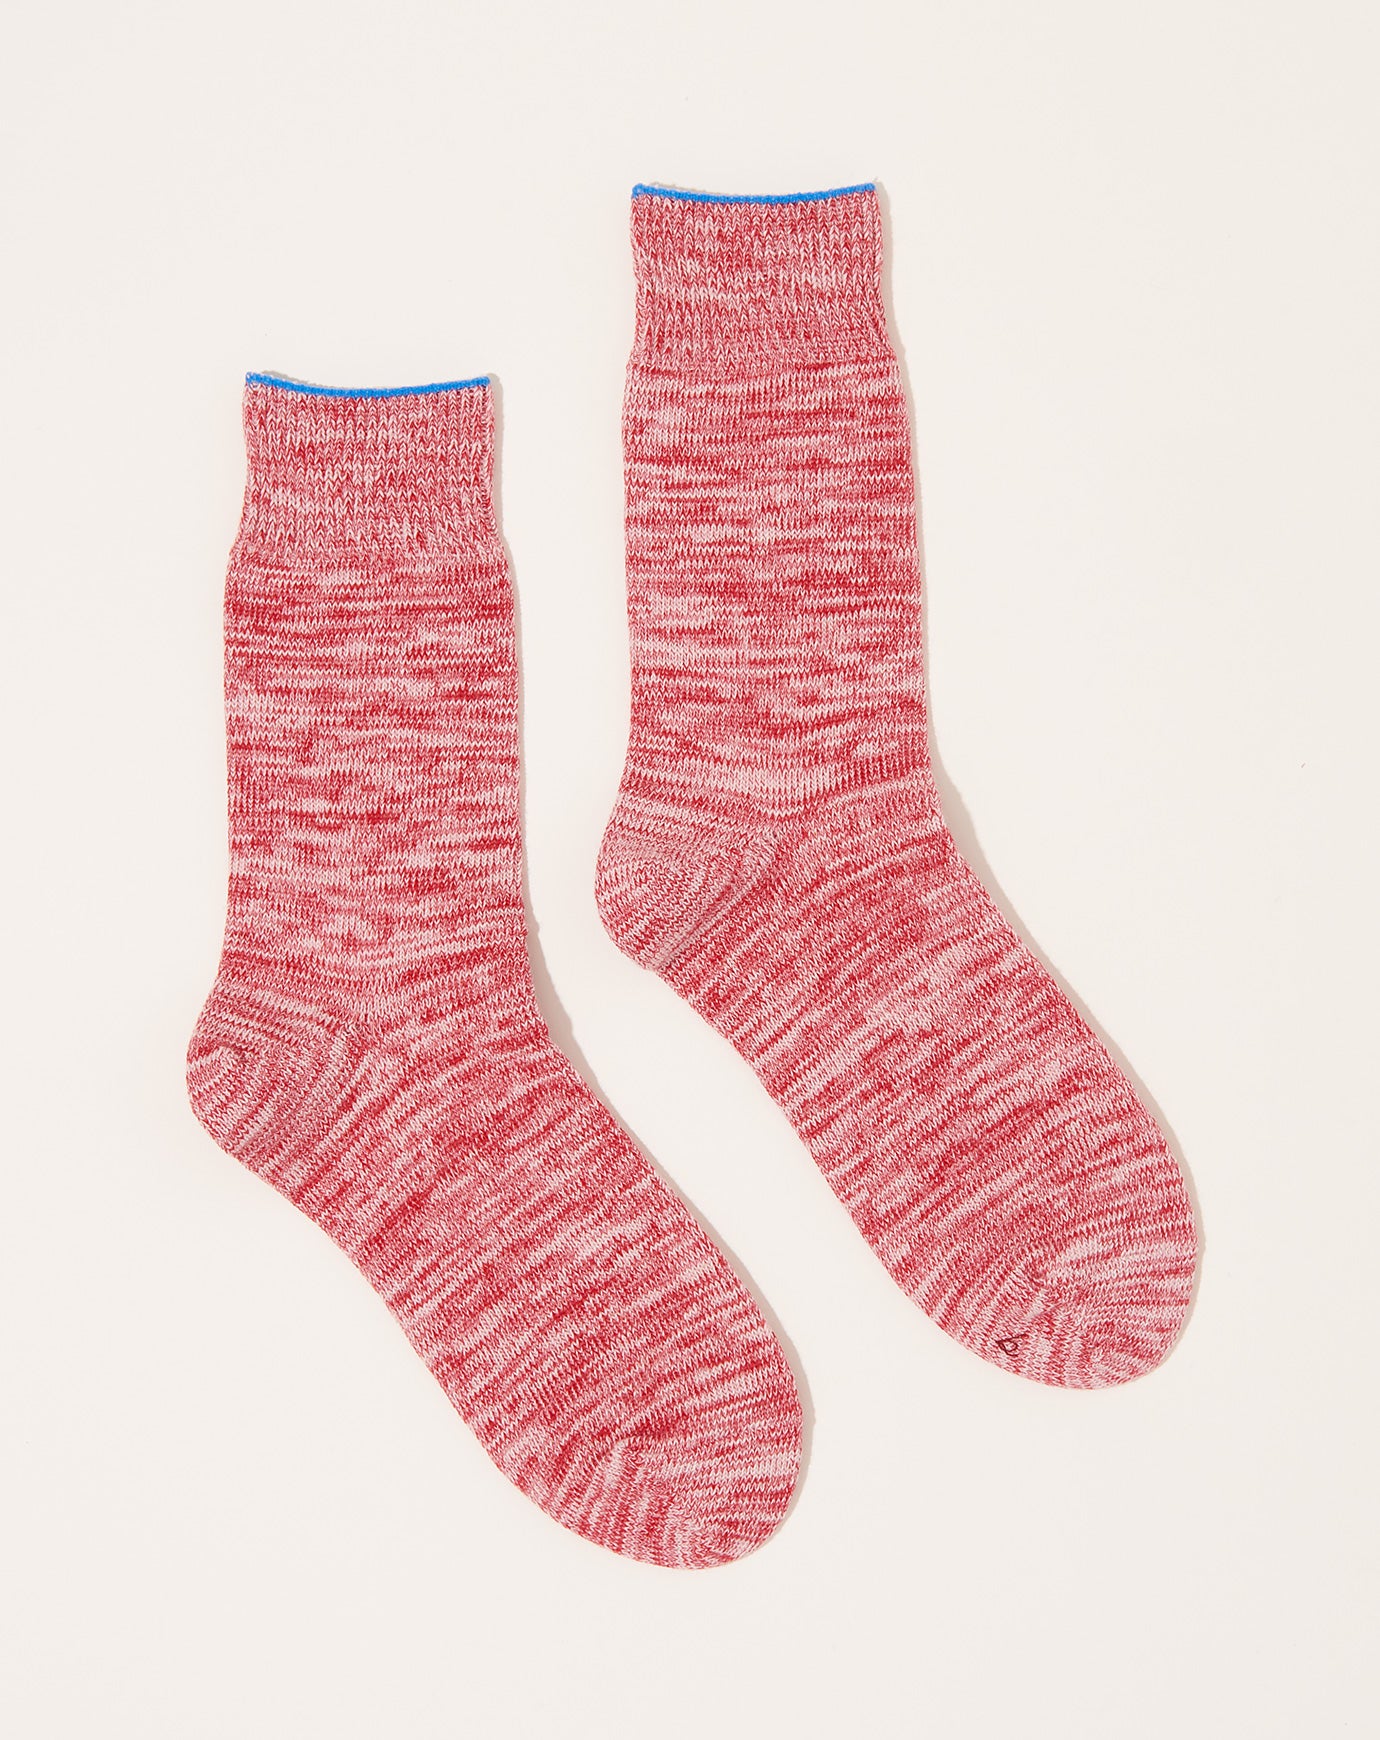 Babaco 2 Pairs Of Botanical Dyed Organic Cotton Socks in Strawberry